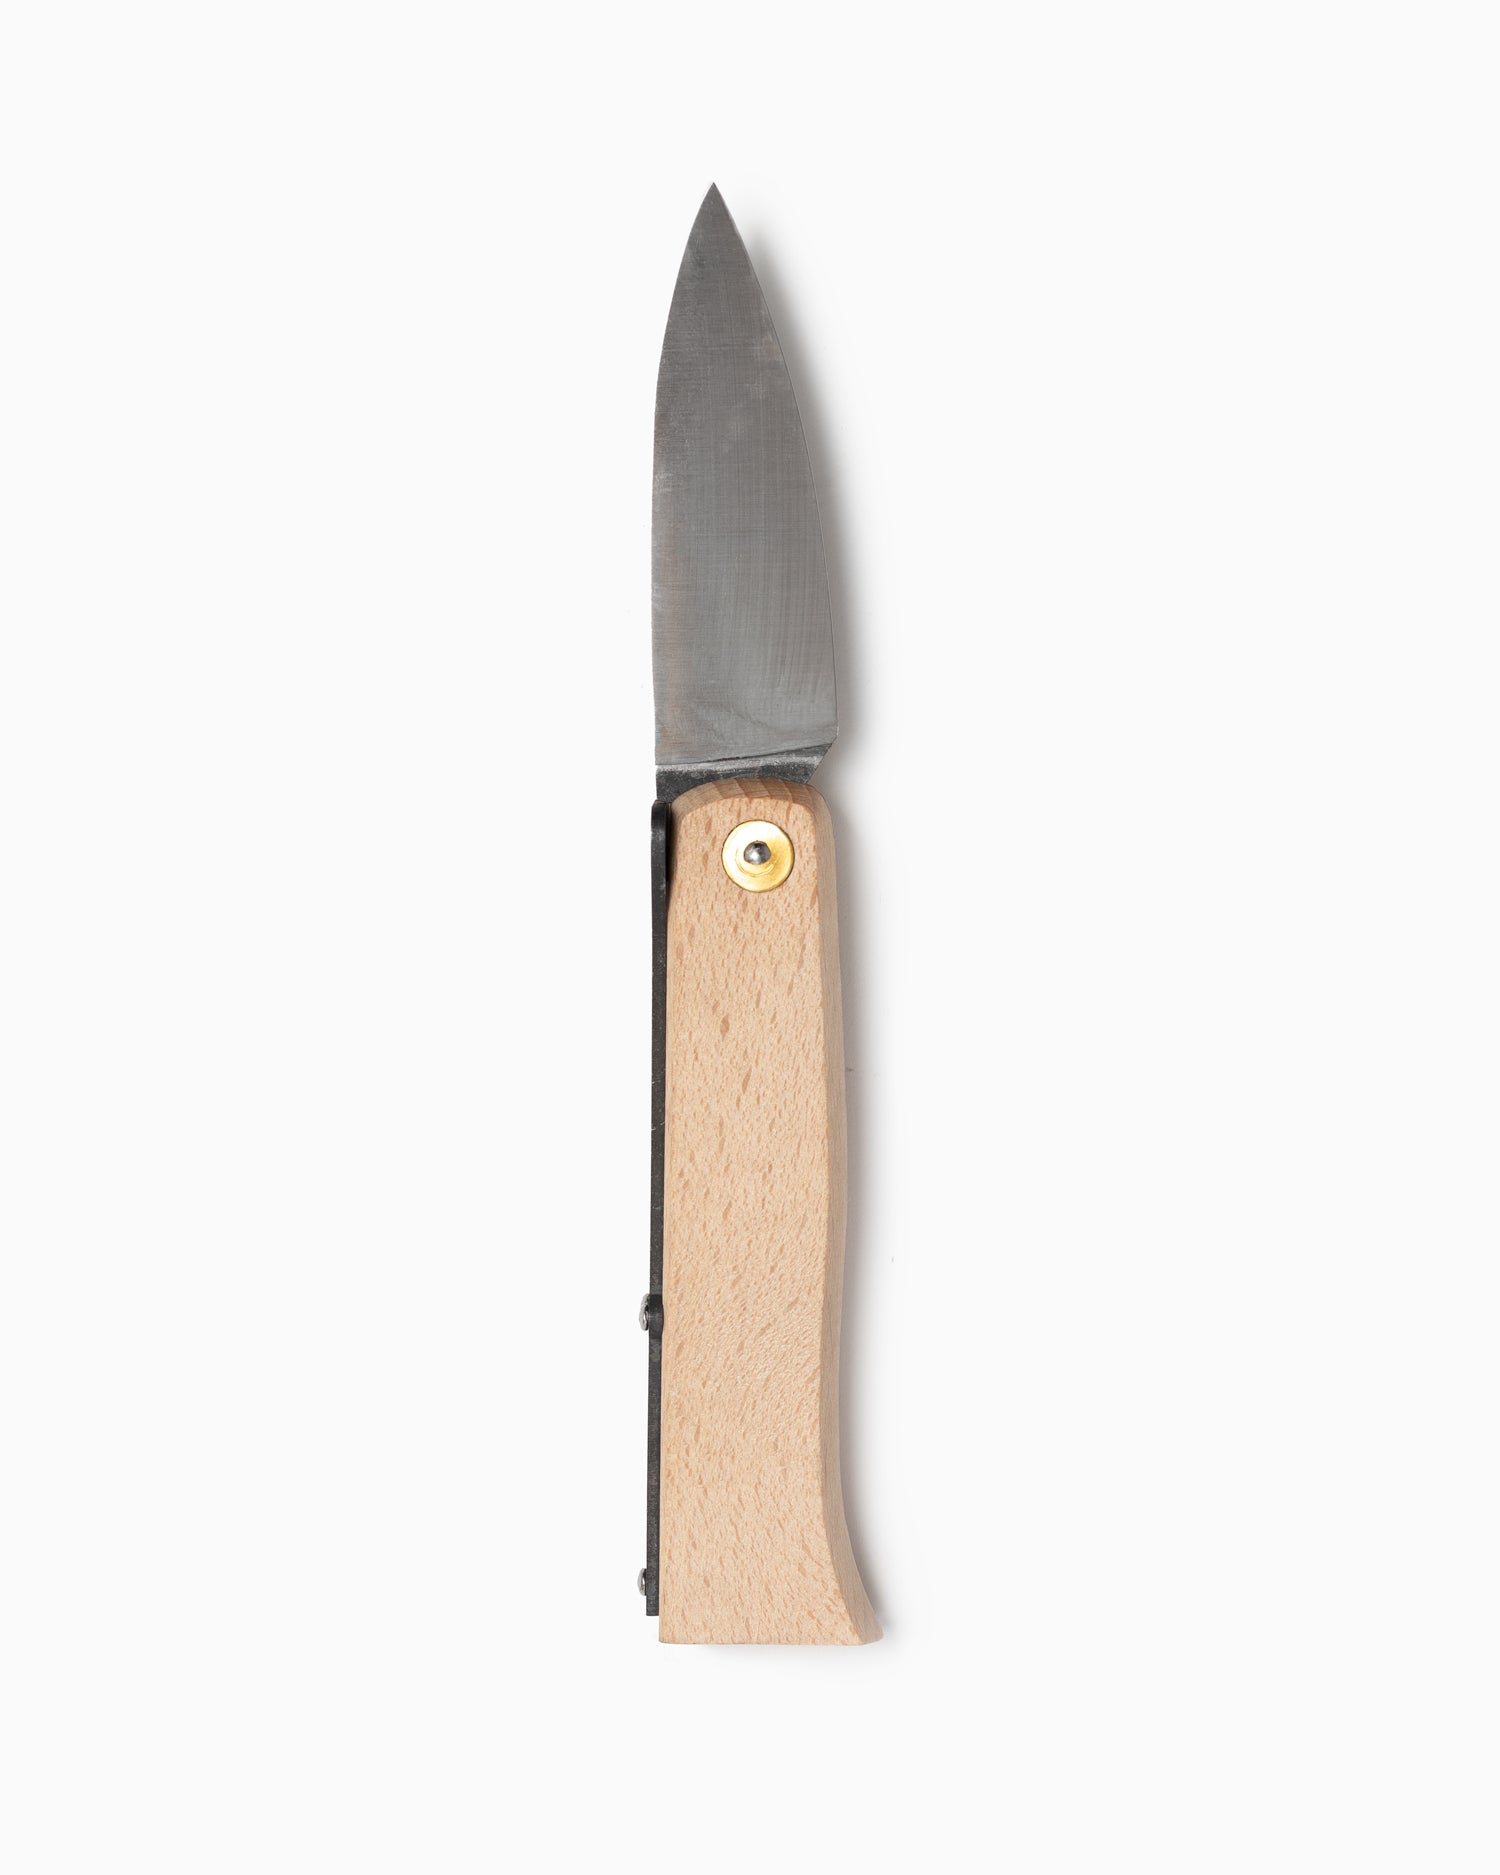 Robert Herder 'Lierenaar' Farmer's Knife